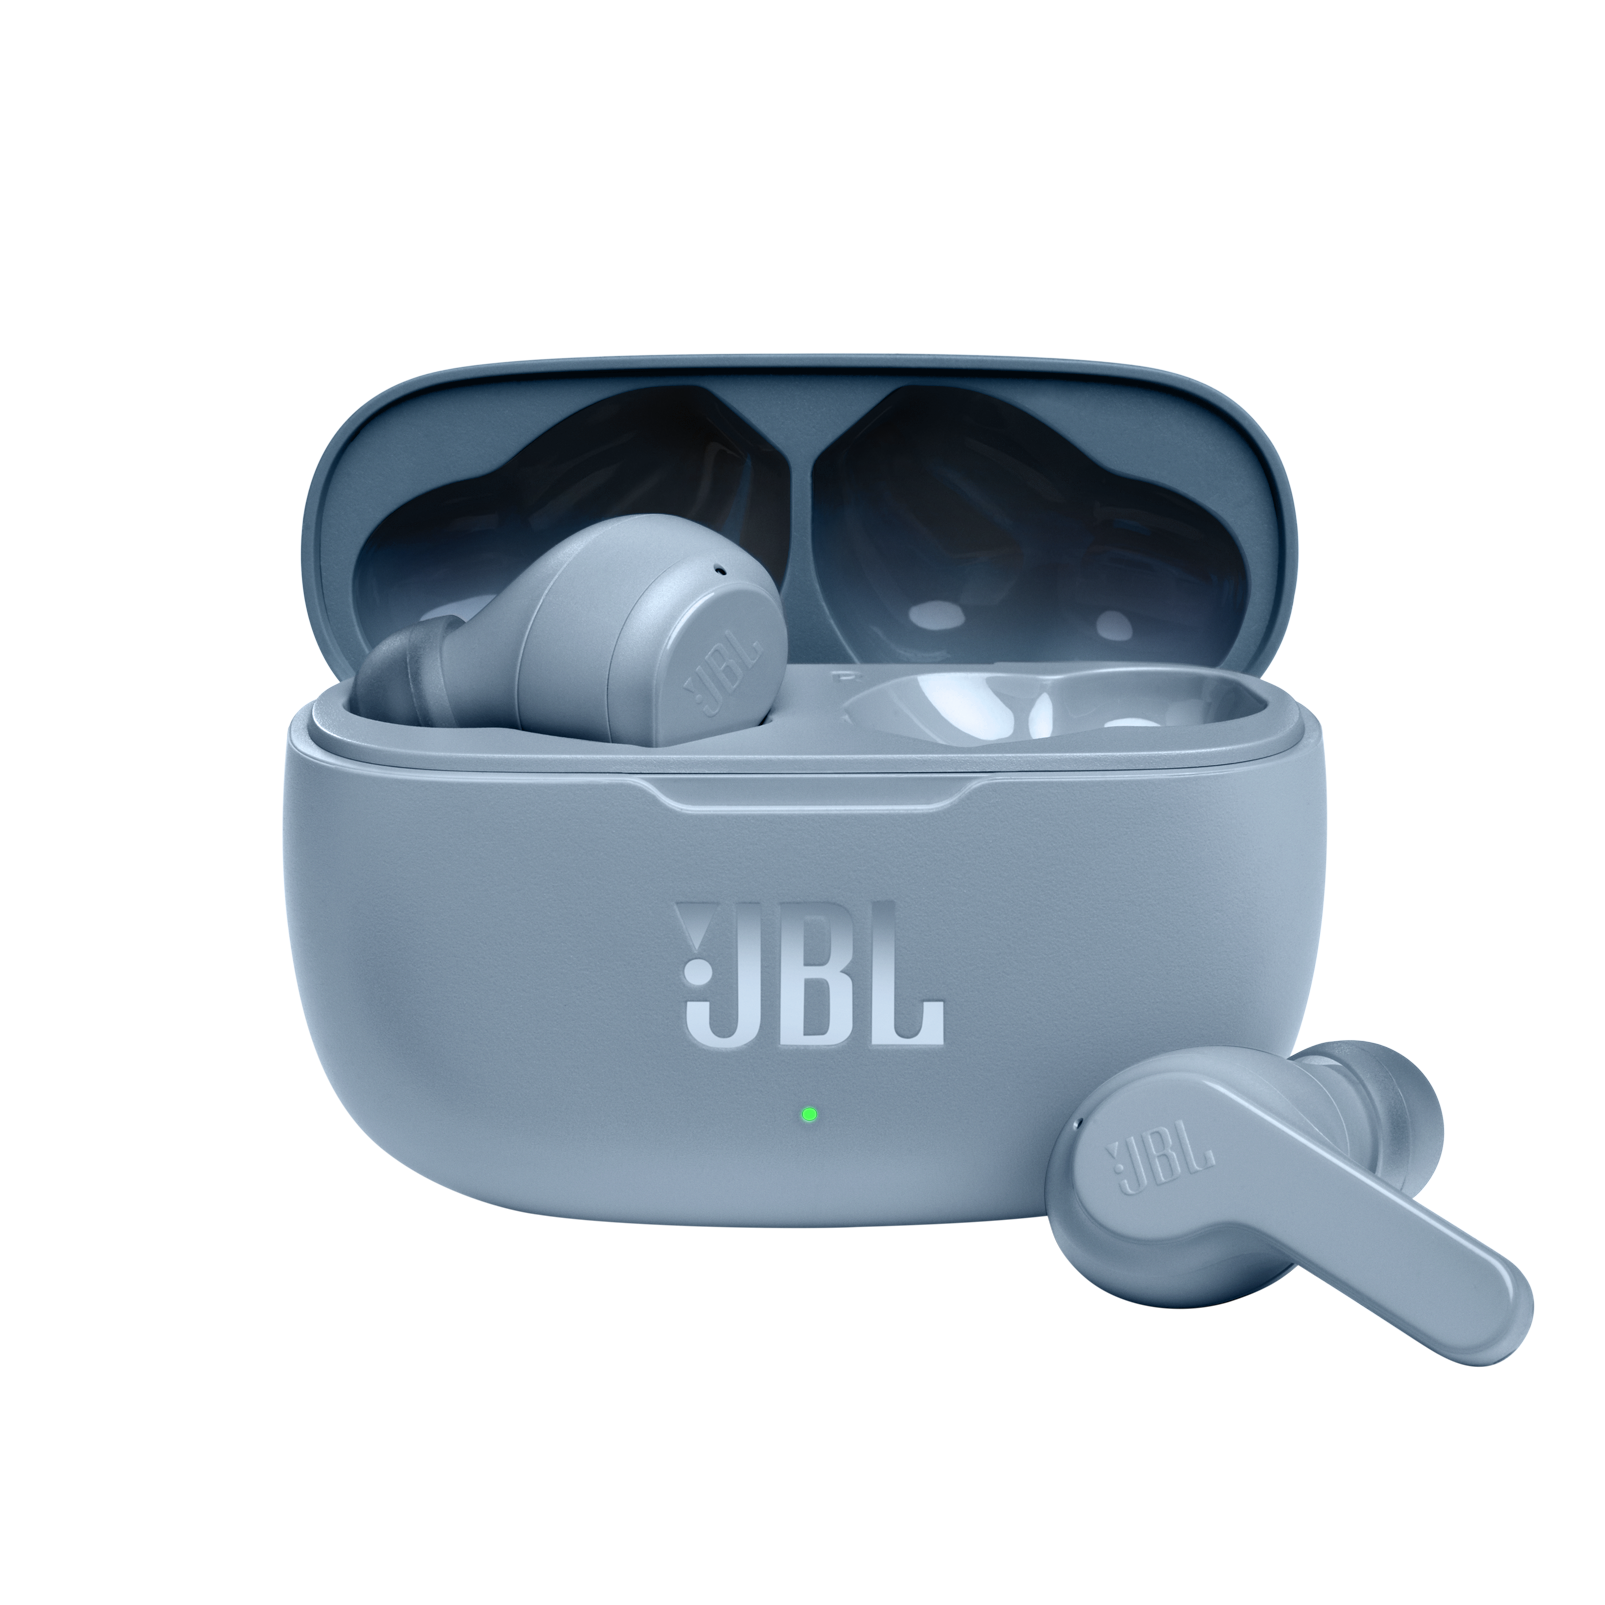 JBL Vibe 200 TWS